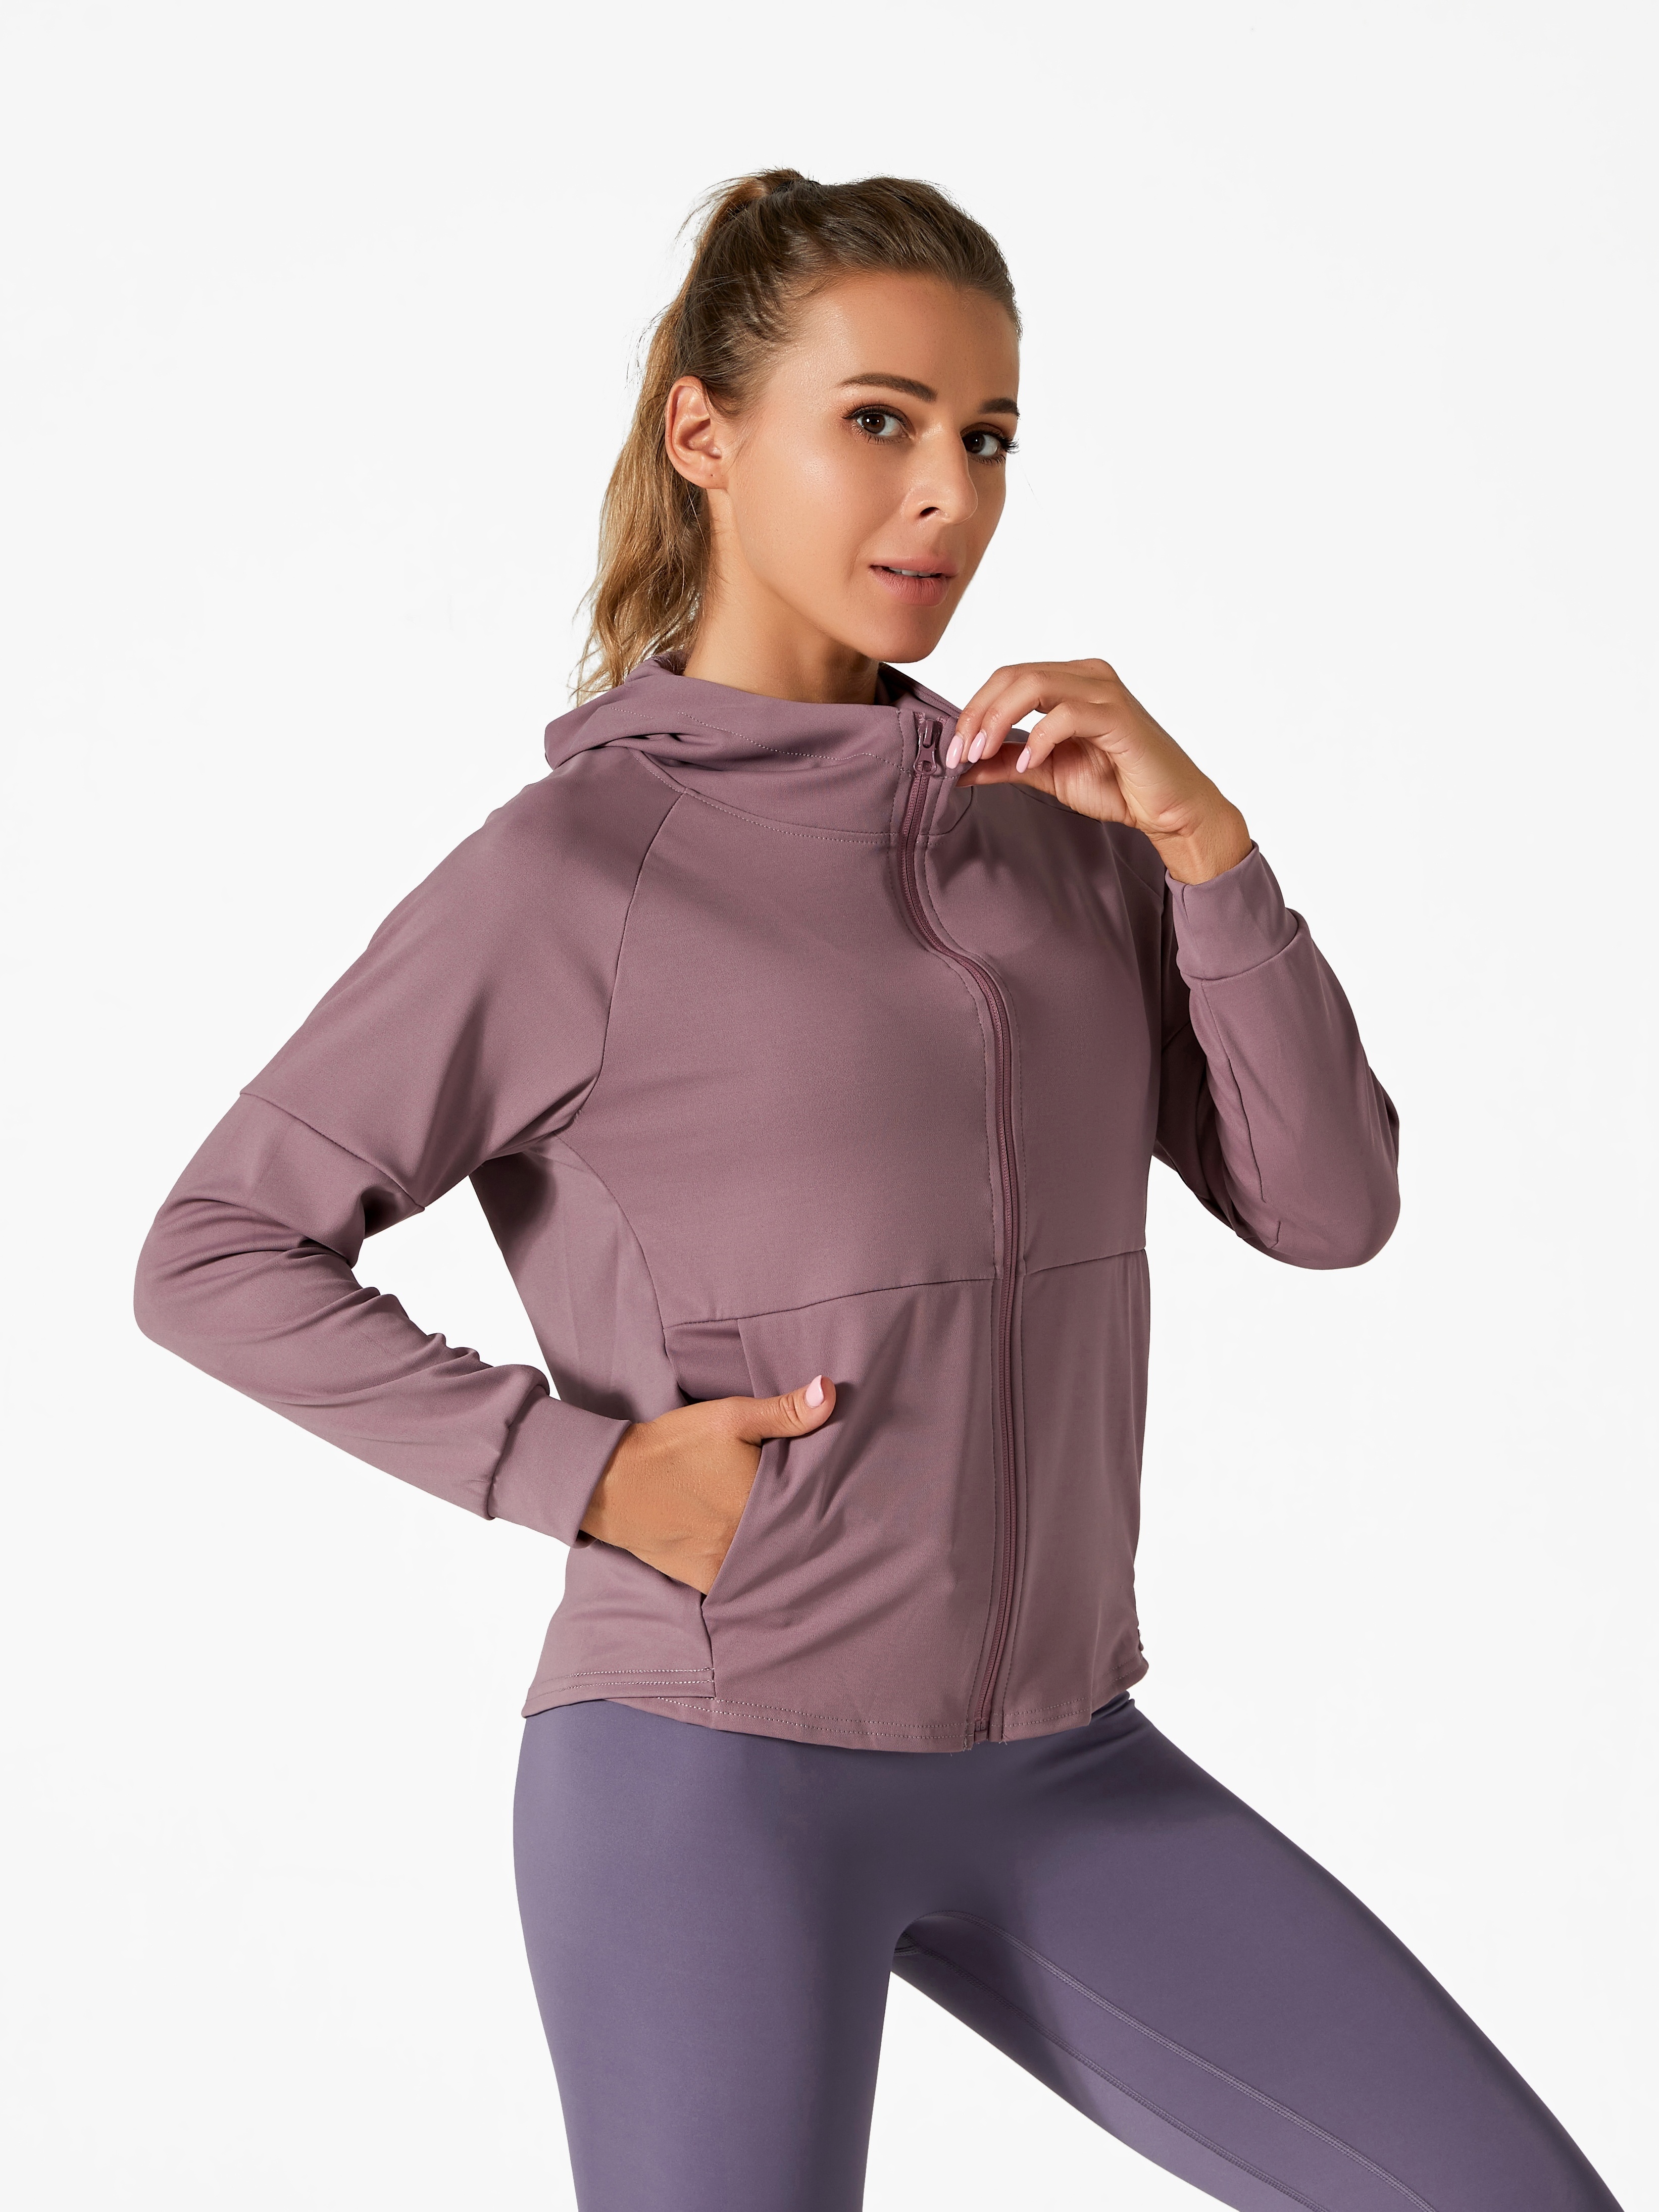 Women's Lightweight Workout Jacket Full-zip Long Sleeve Yoga